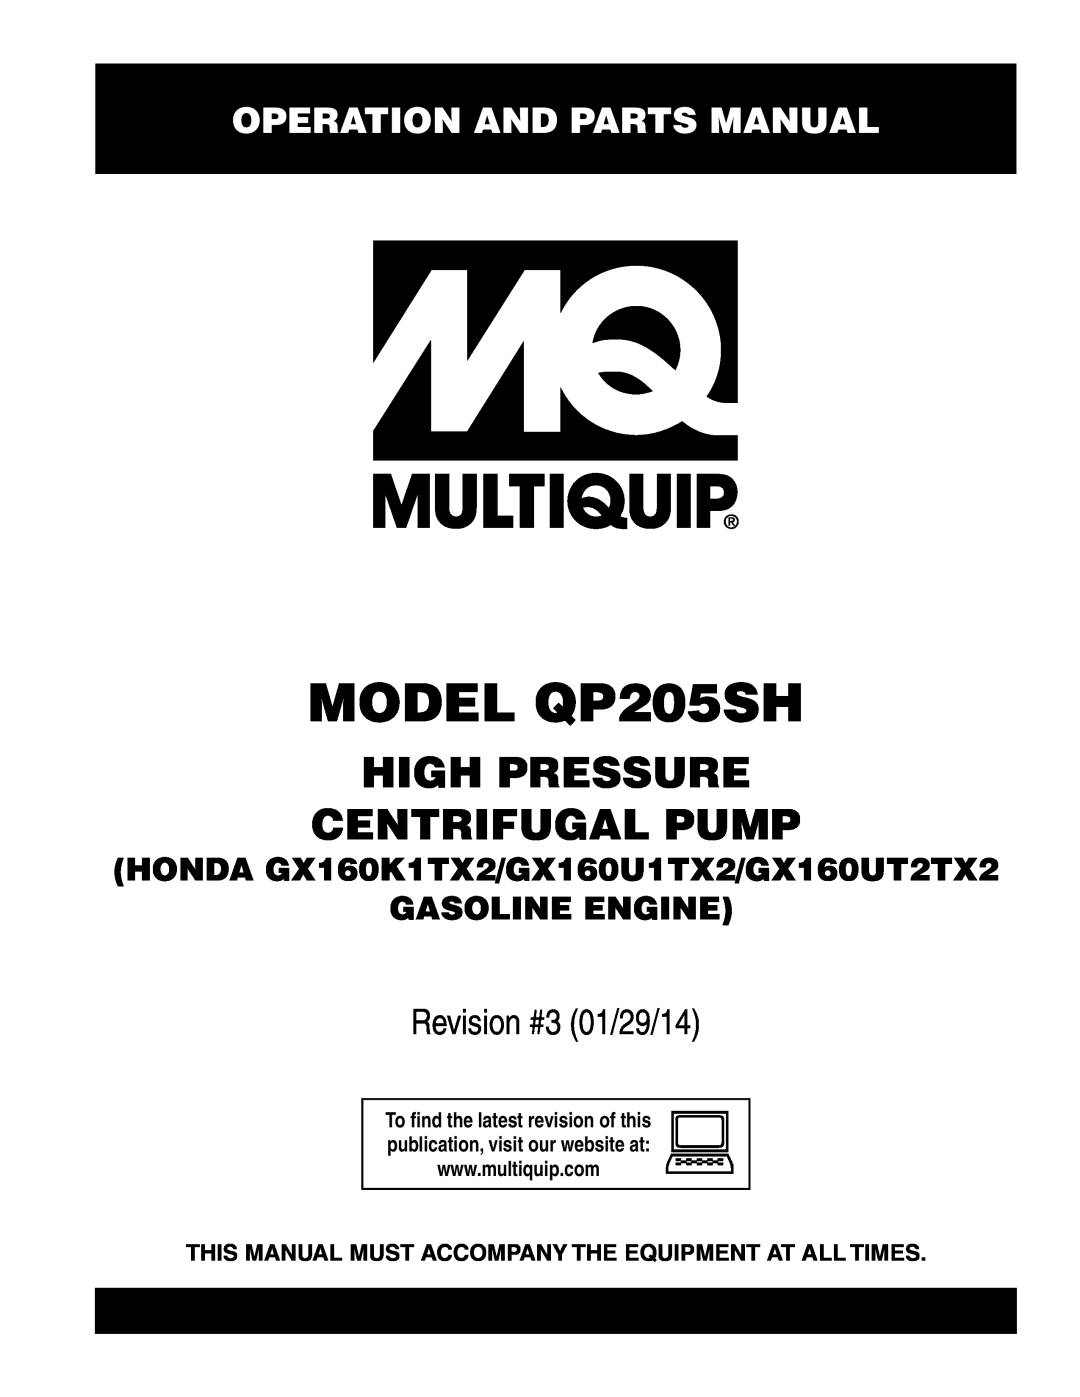 Honda Power Equipment manual Operation And Parts Manual, MODEL QP205SH, High Pressure Centrifugal Pump, Gasoline Engine 